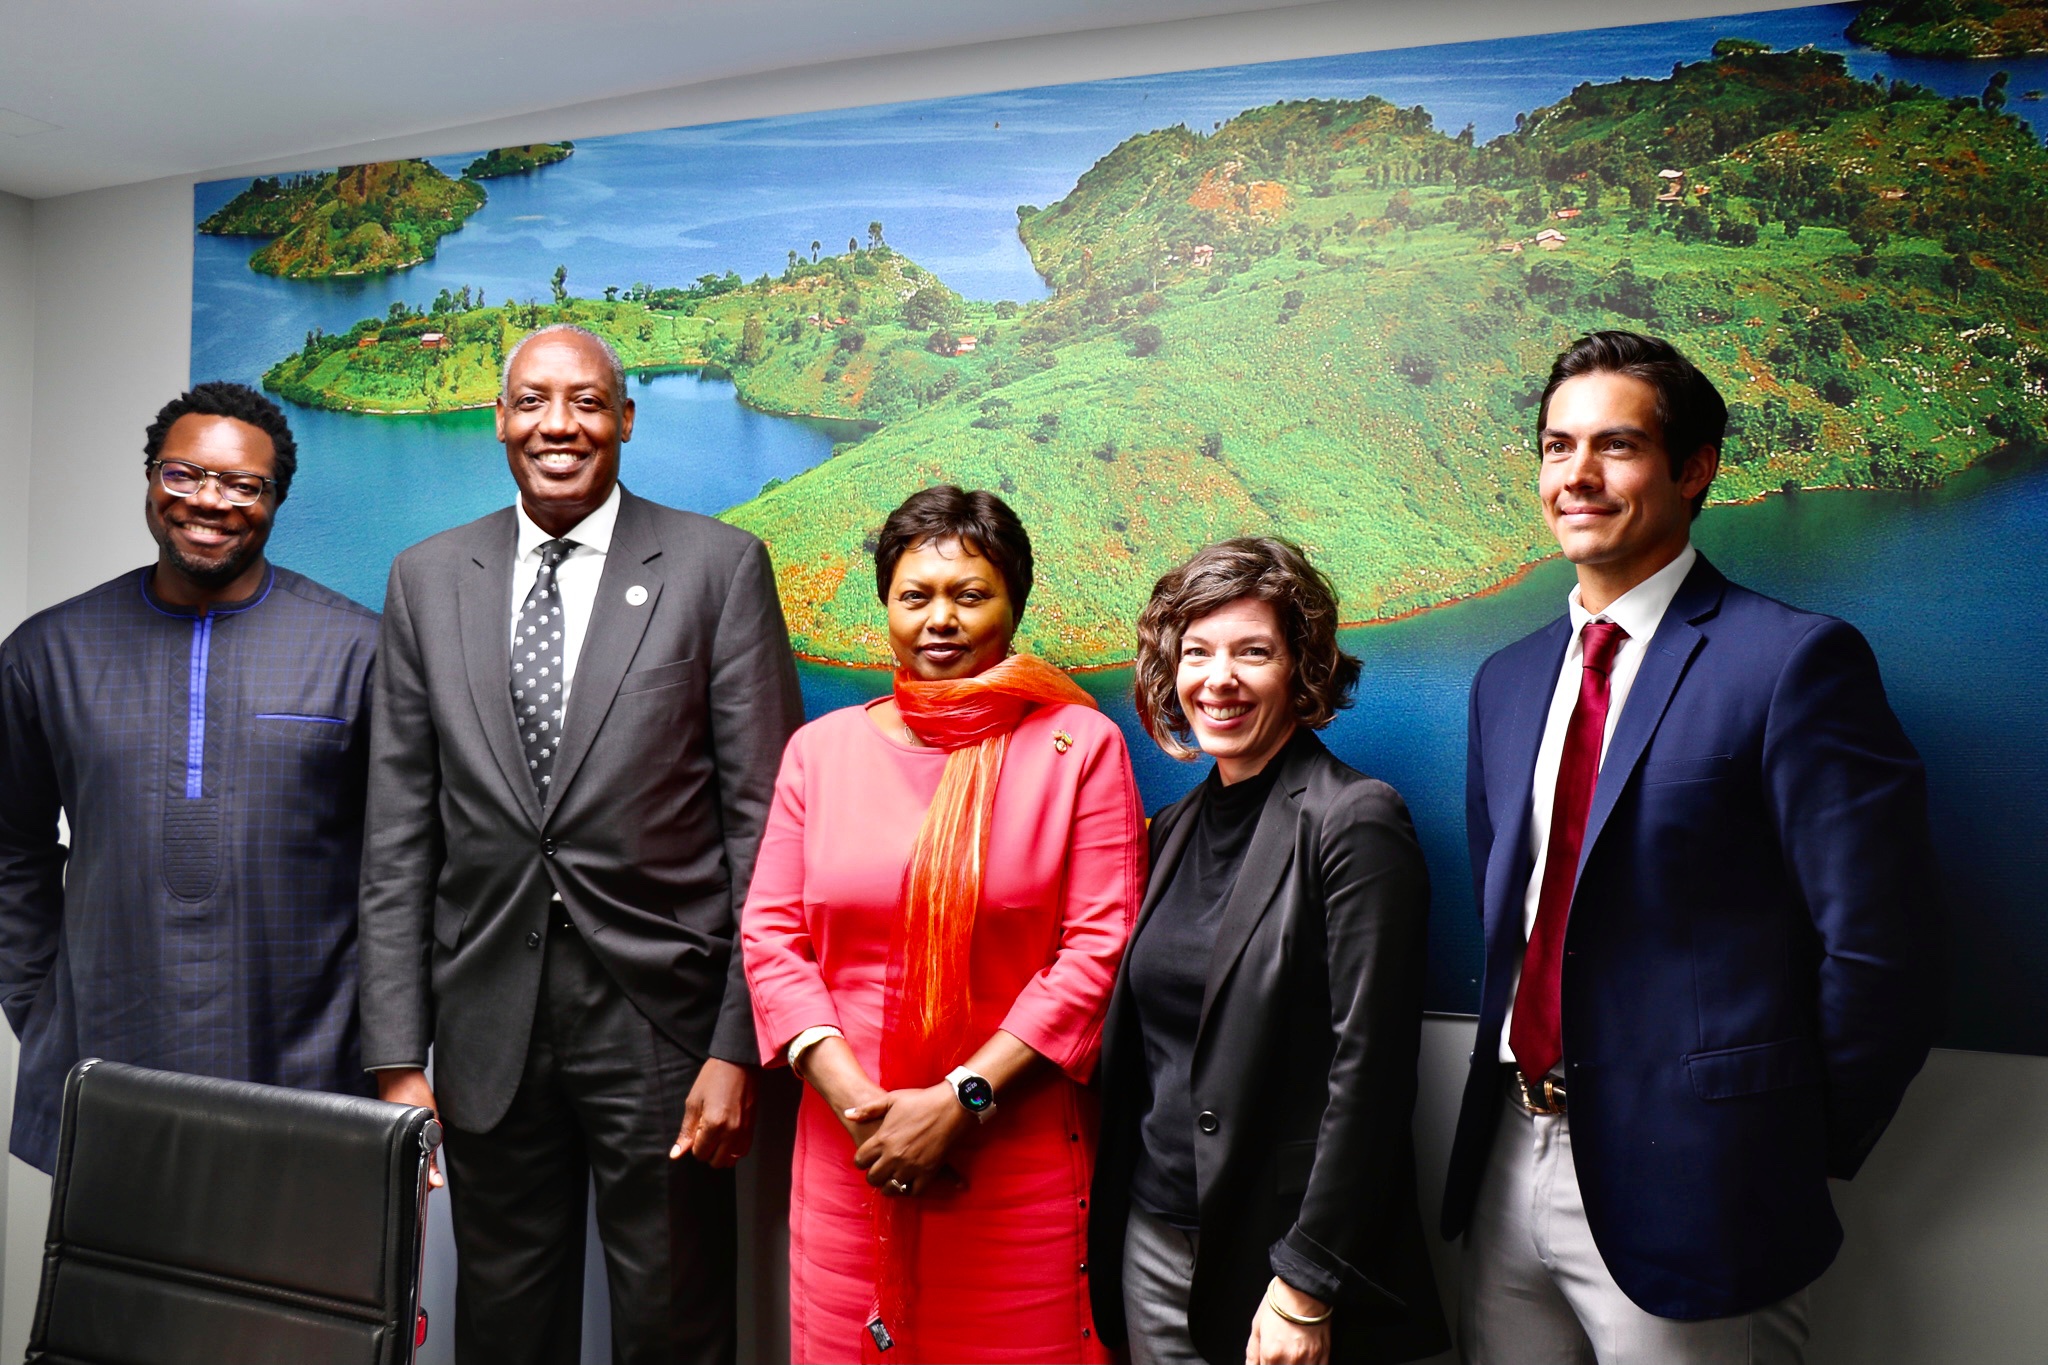 Image of MIIS student, Harrison Livesay at the Rwandan Embassy in DC with team members and AWFs CEO, Kaddu Sebunya, and the Rwandan ambassador Mathilde Mukantabana